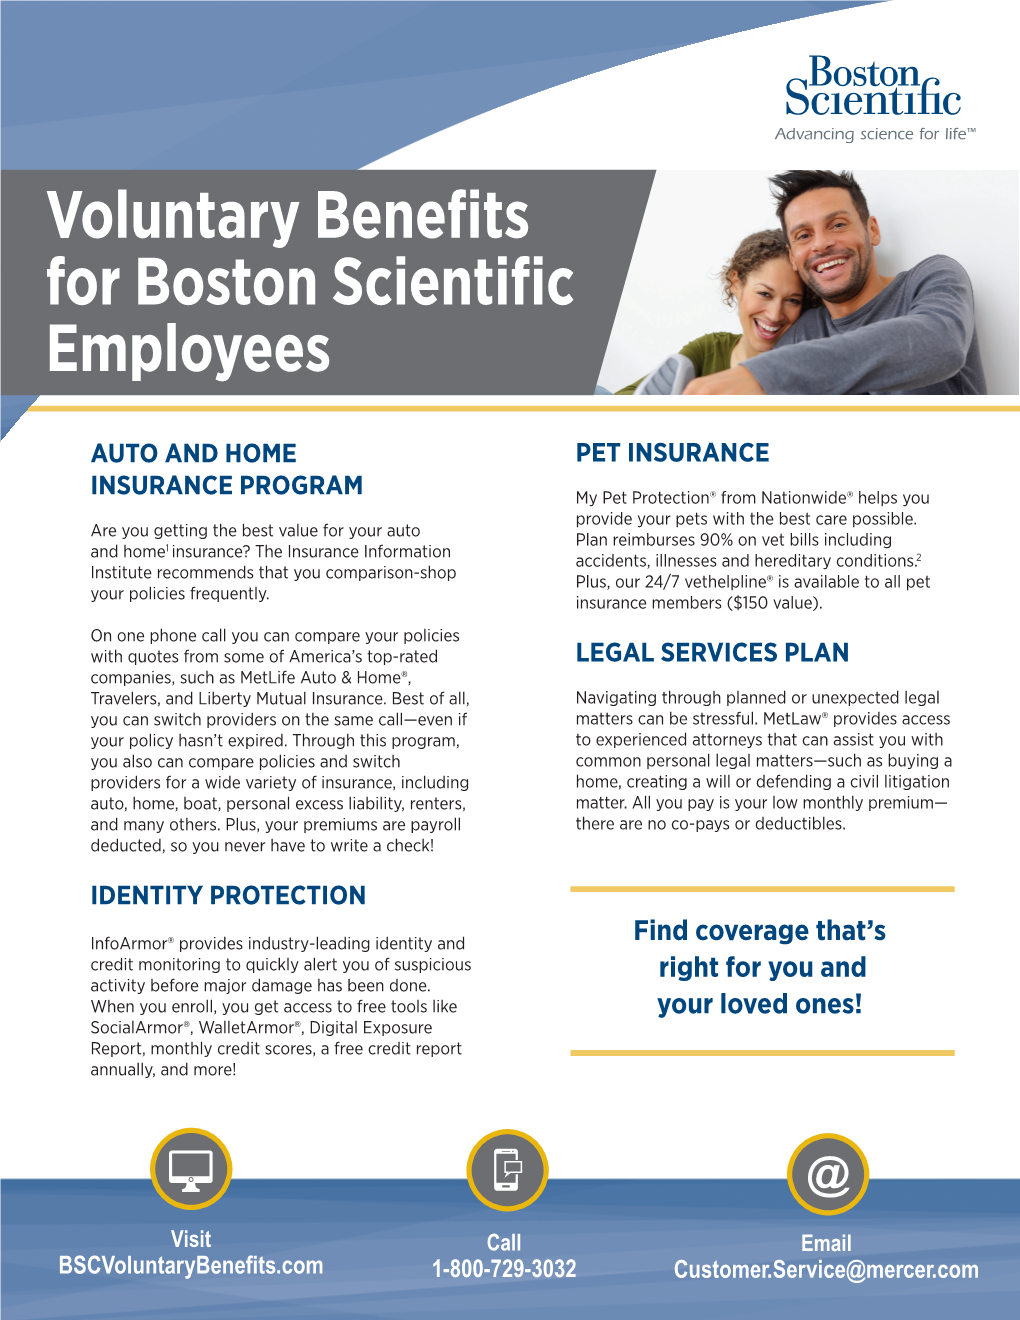 Voluntary Benefits for Boston Scientific Employees